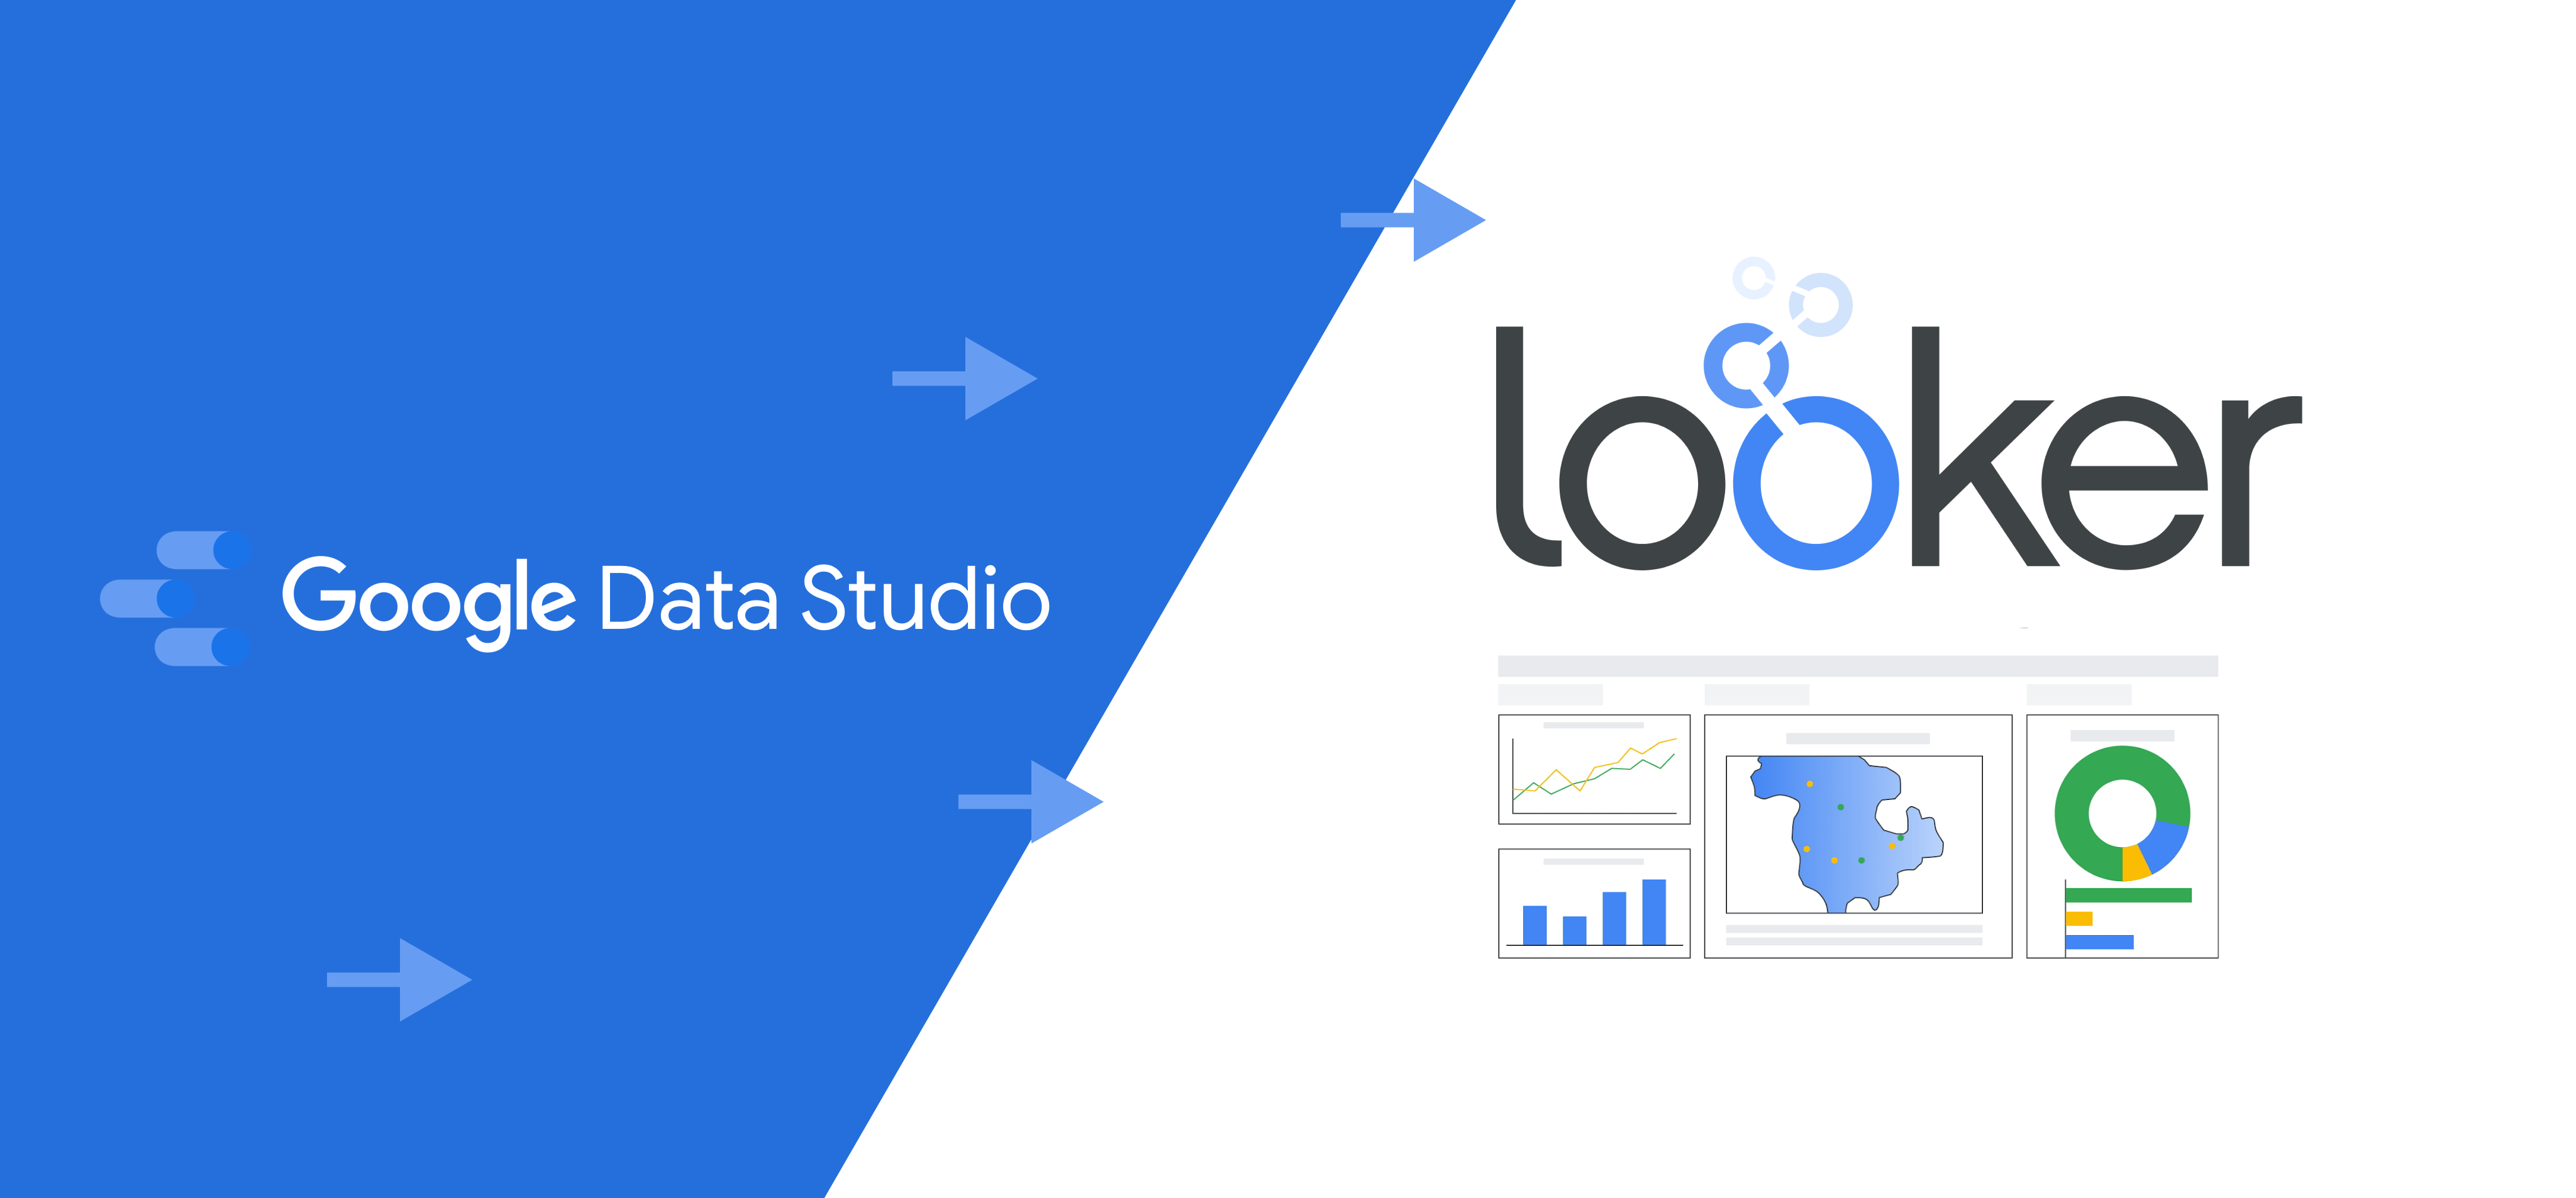 Google data studio - Google Looker studio